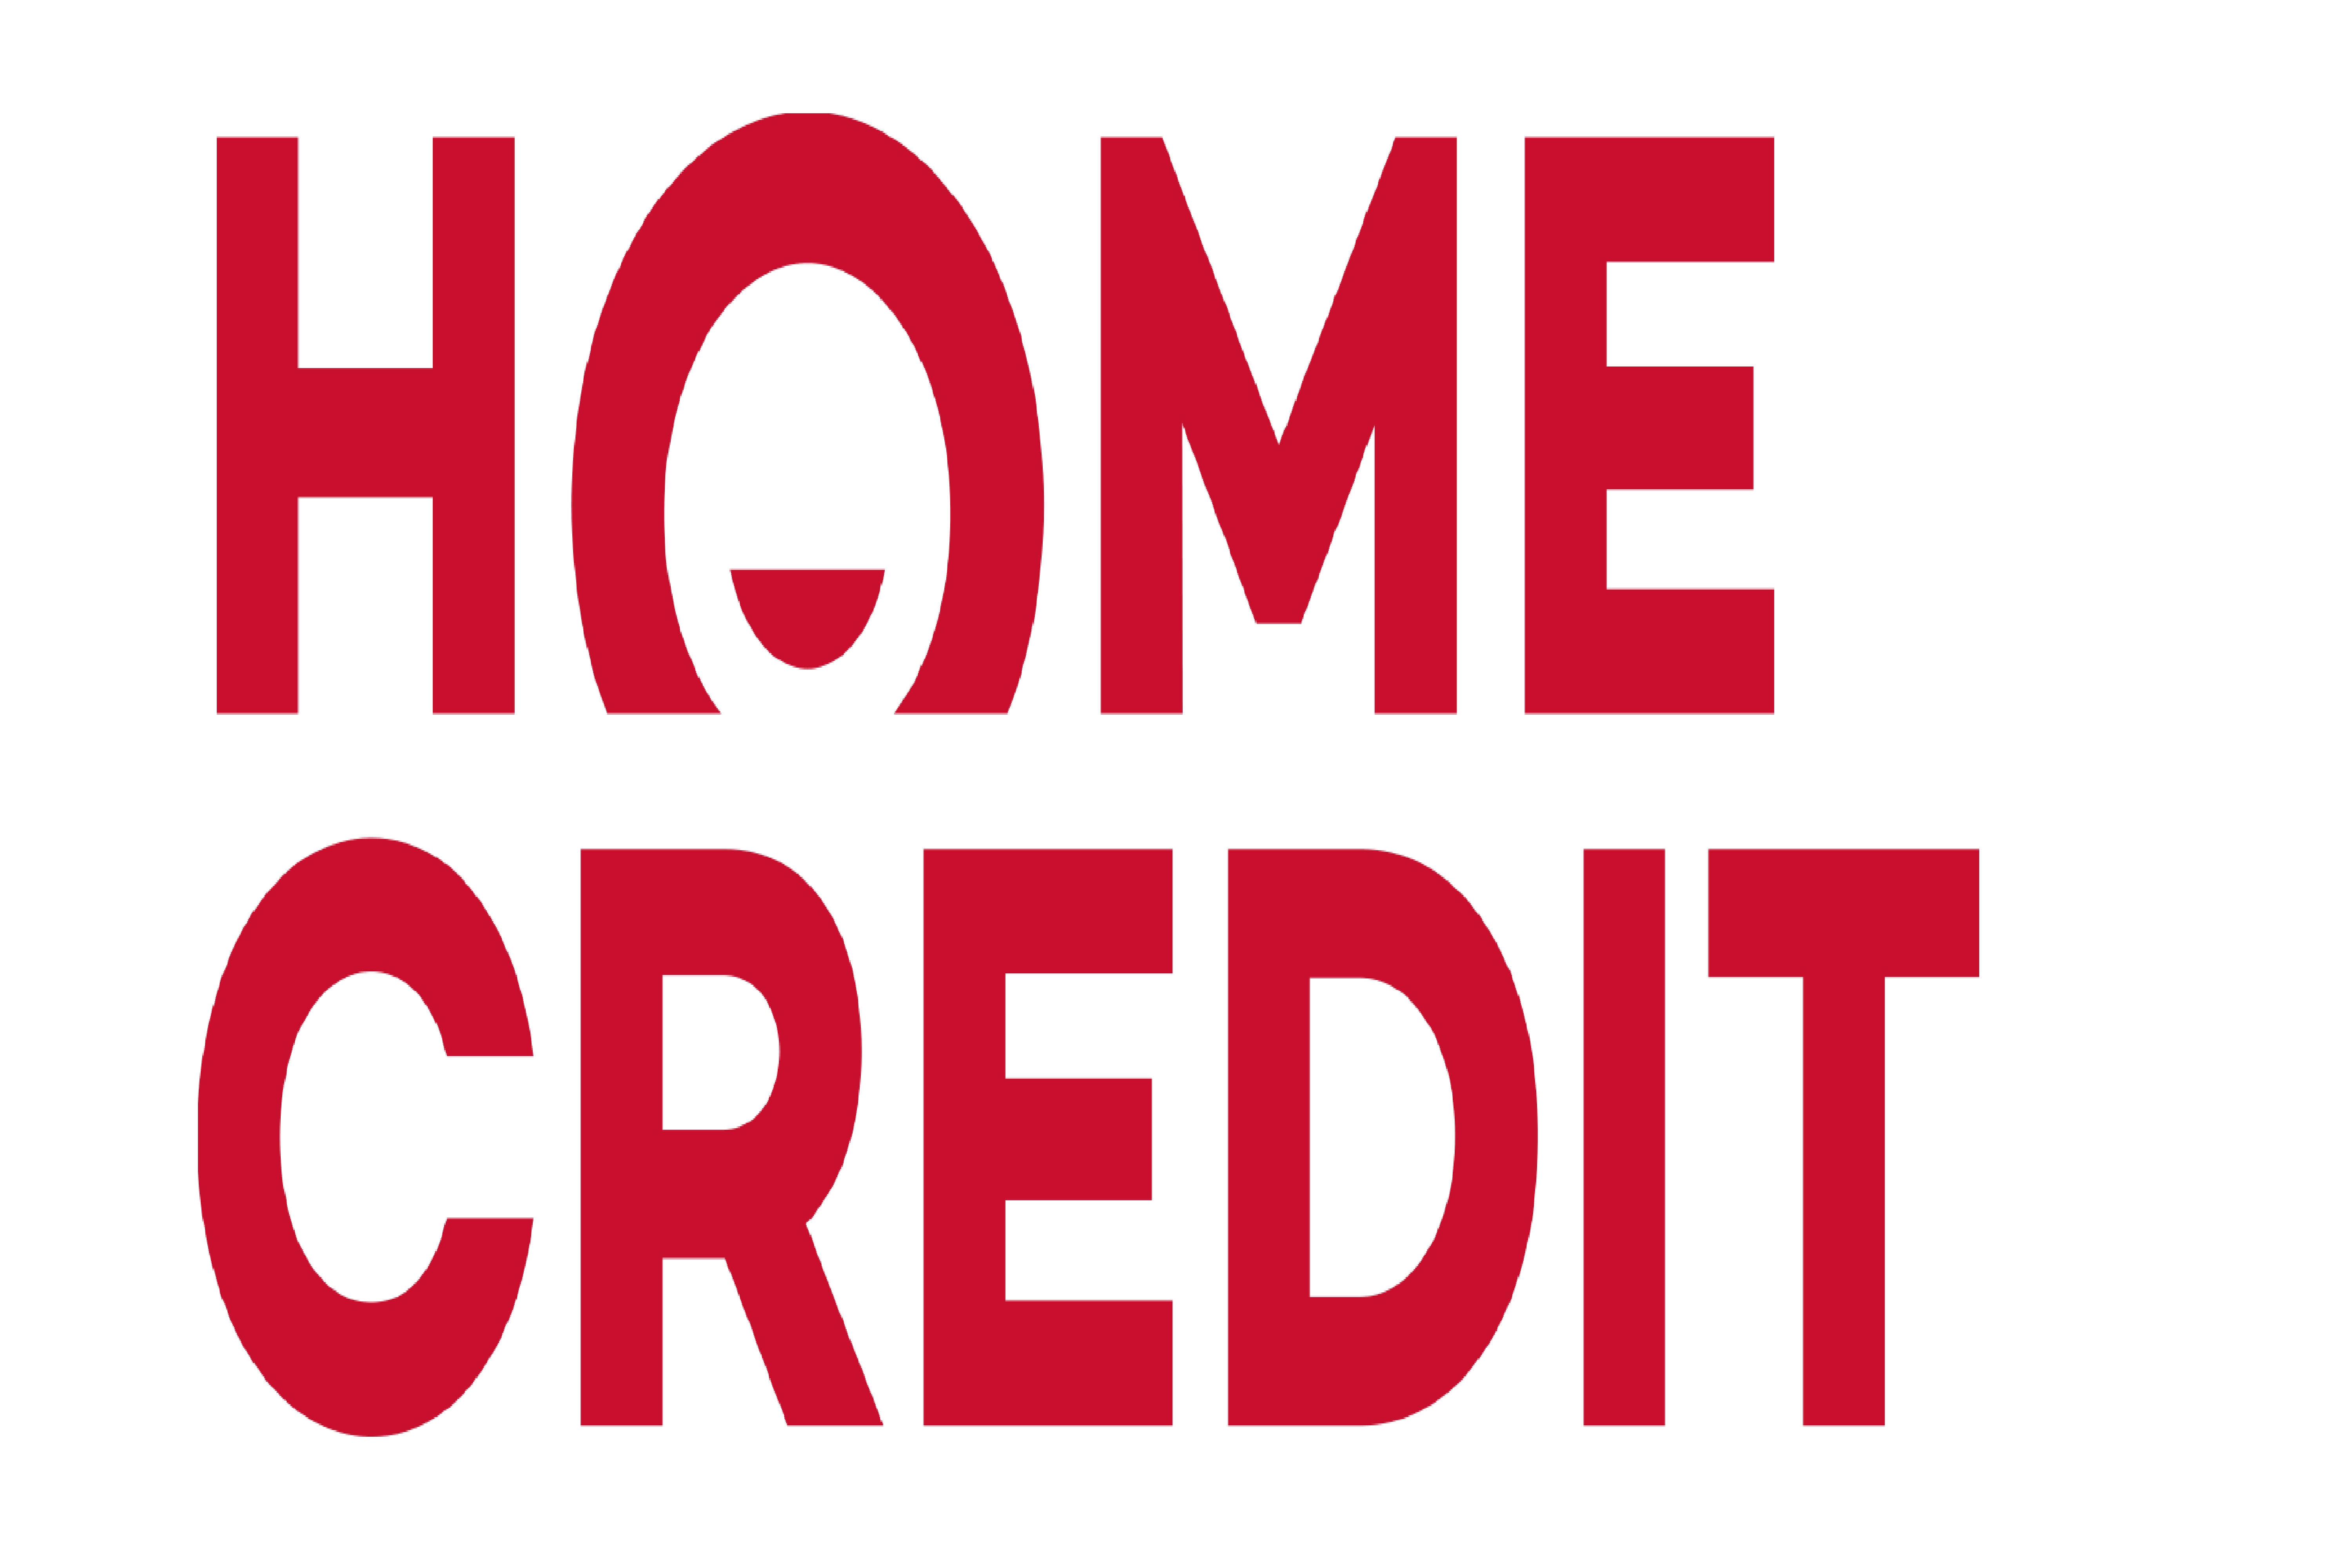 Home Credit Indonesia Logo